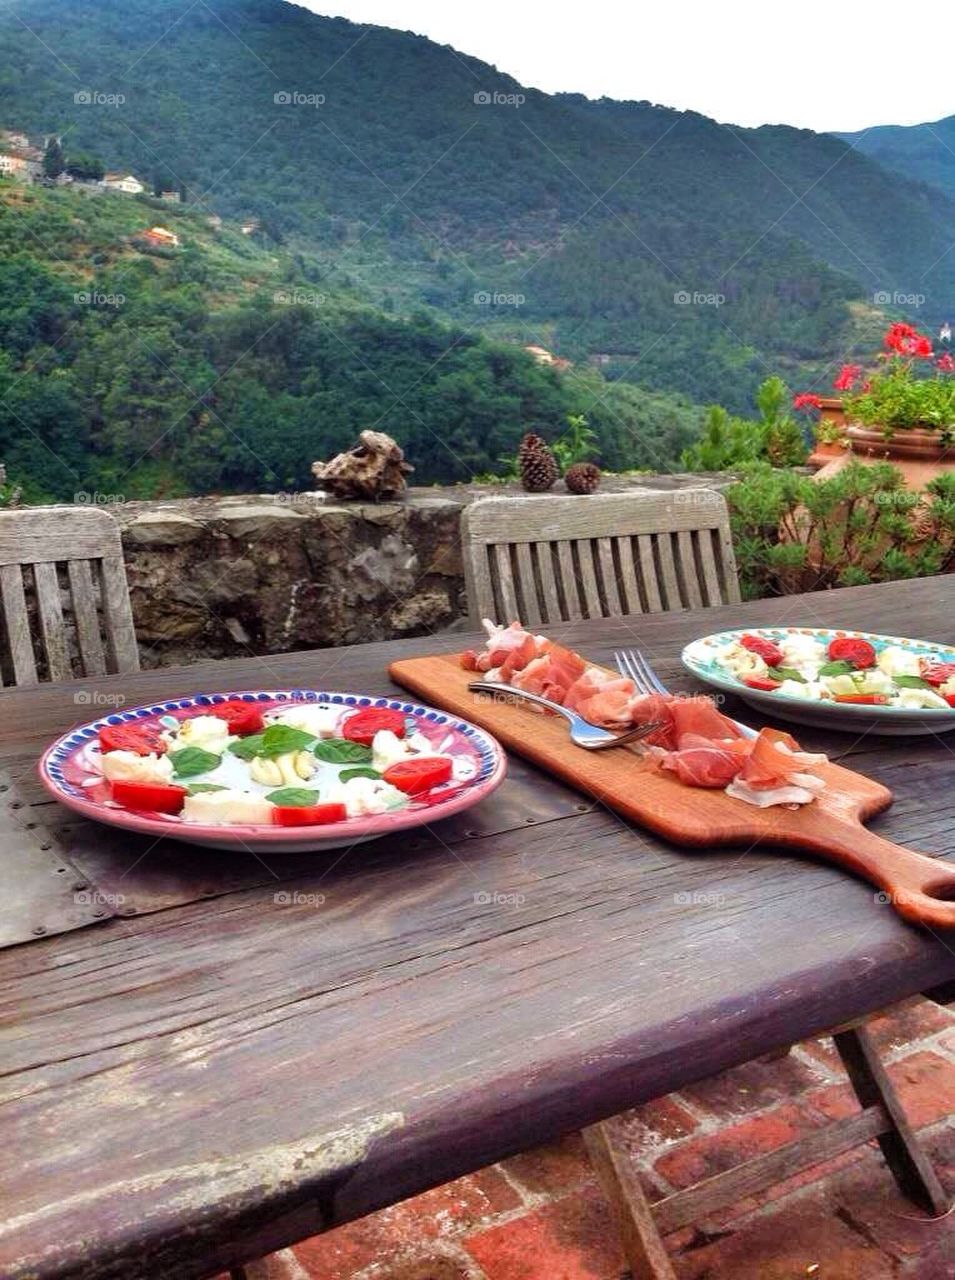 Tuscan feast